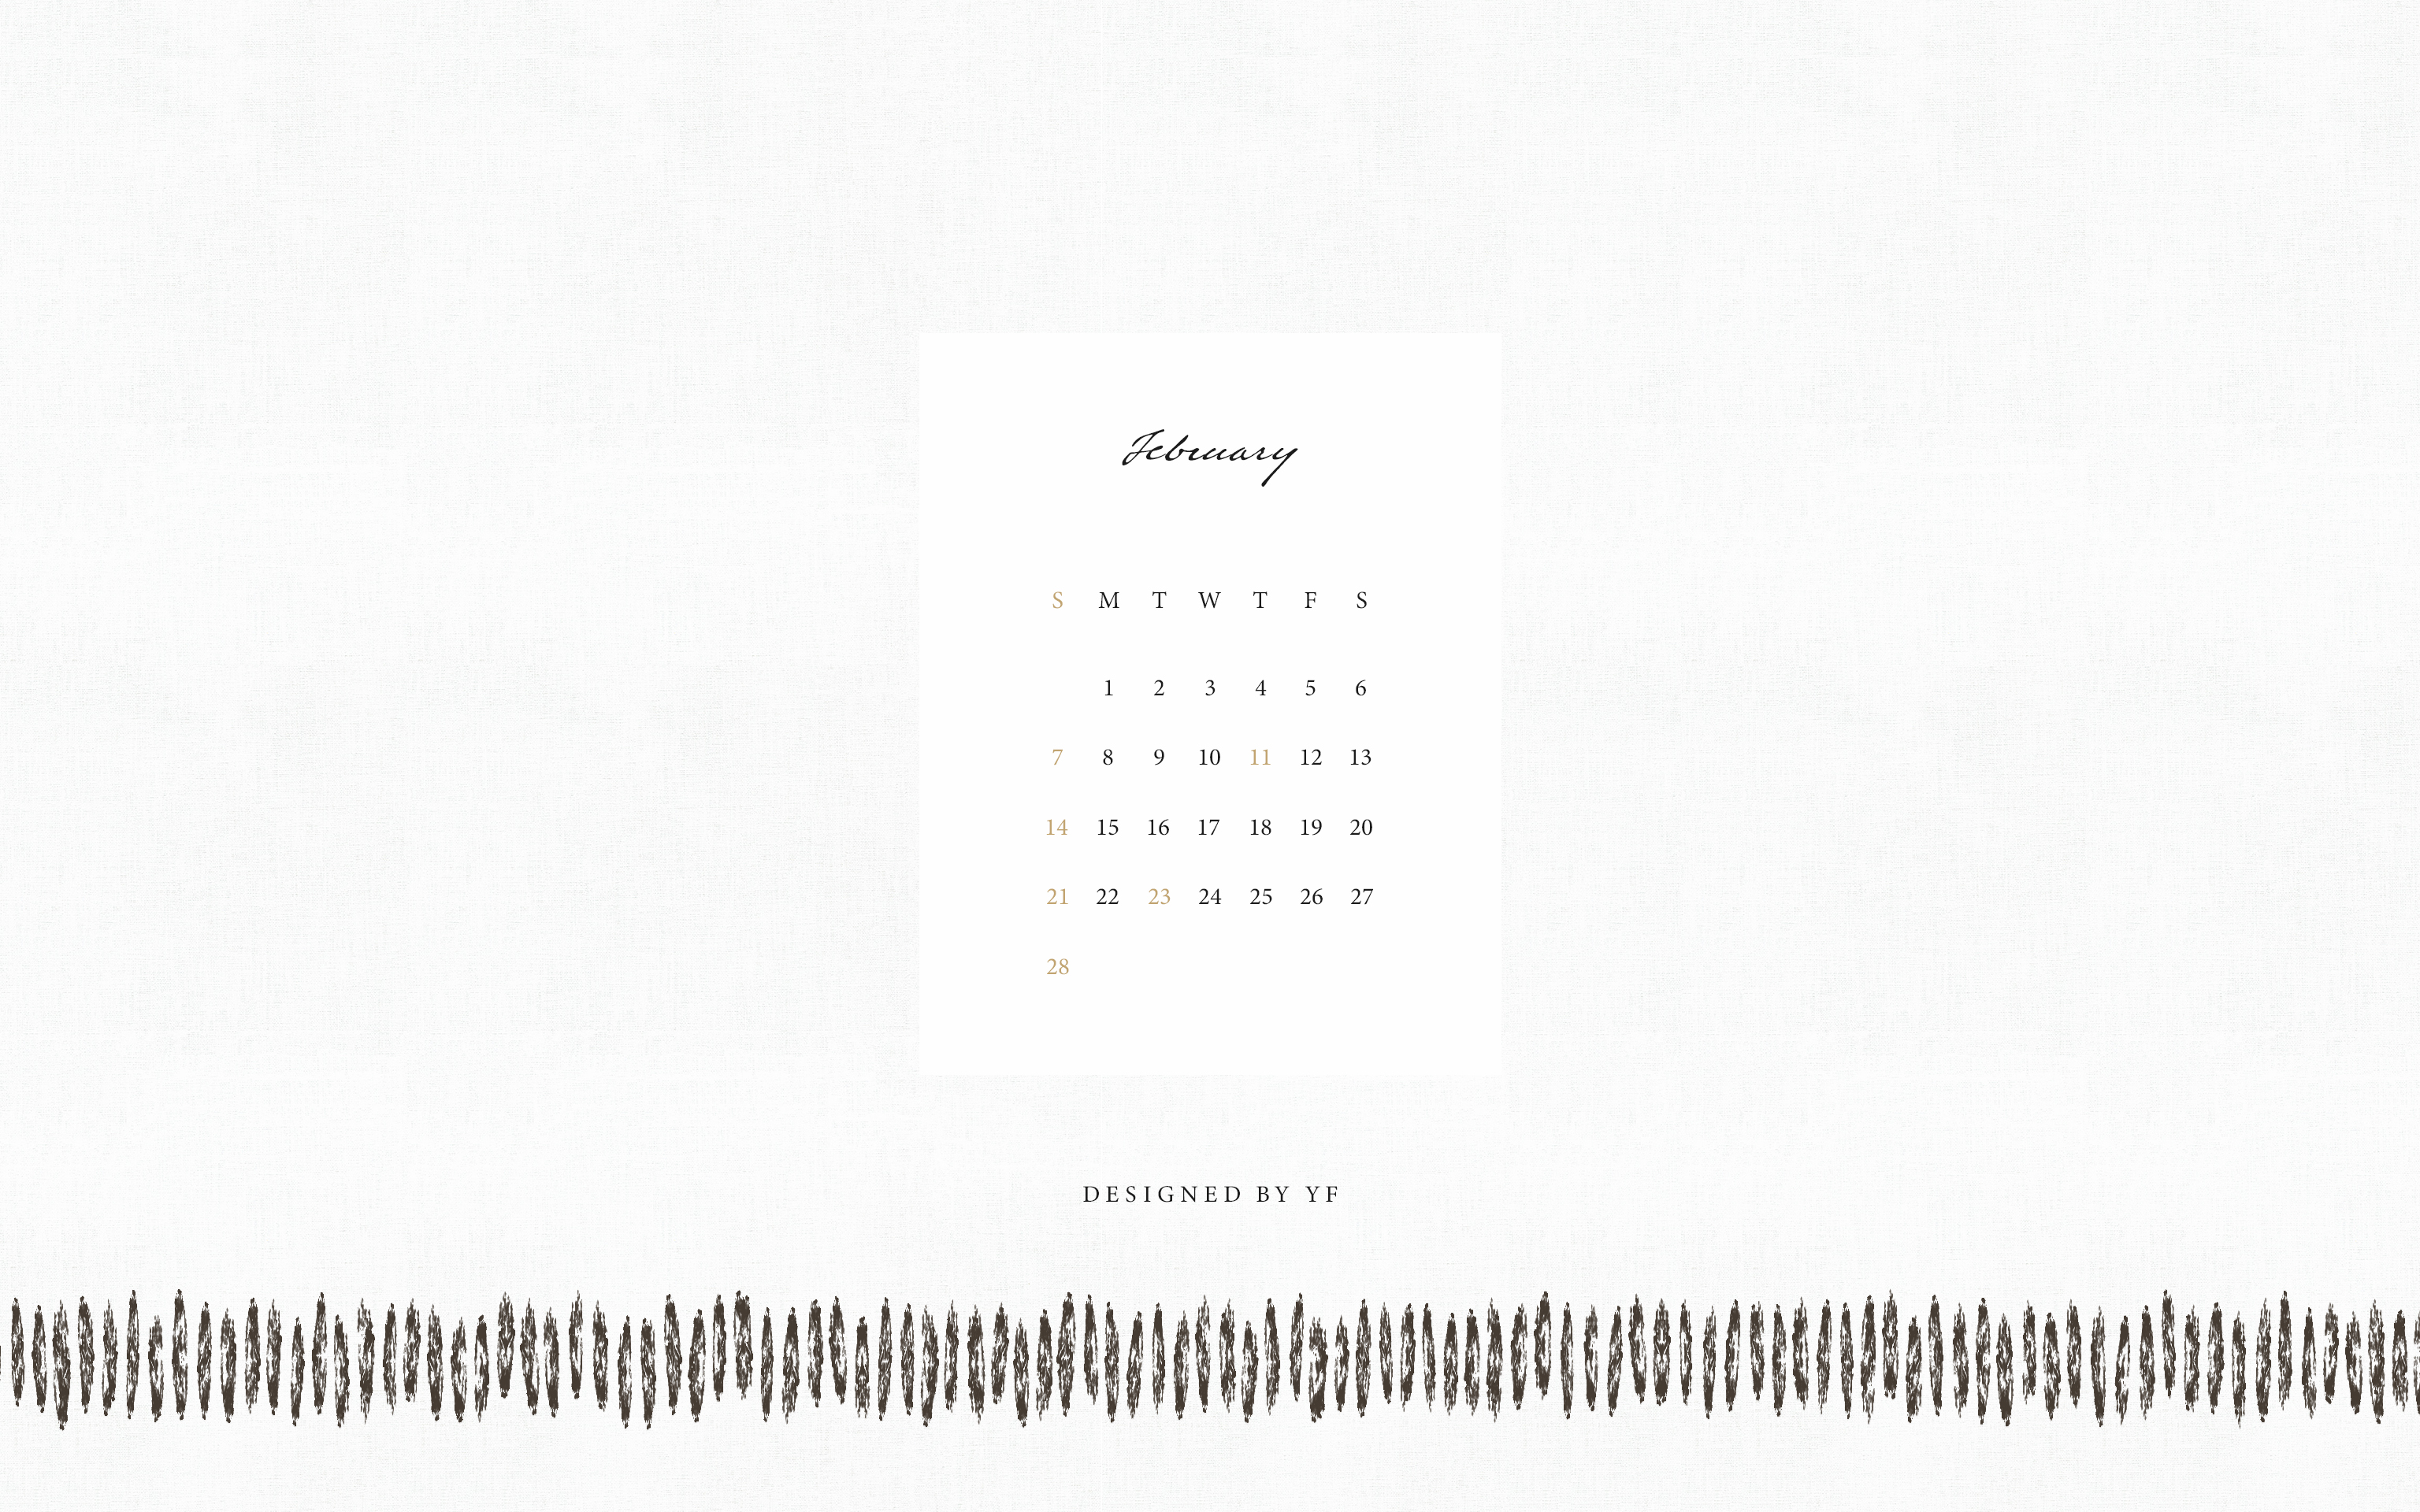 February 21 Calendar Wallpaper For Imac And Macbook Designed By Yf